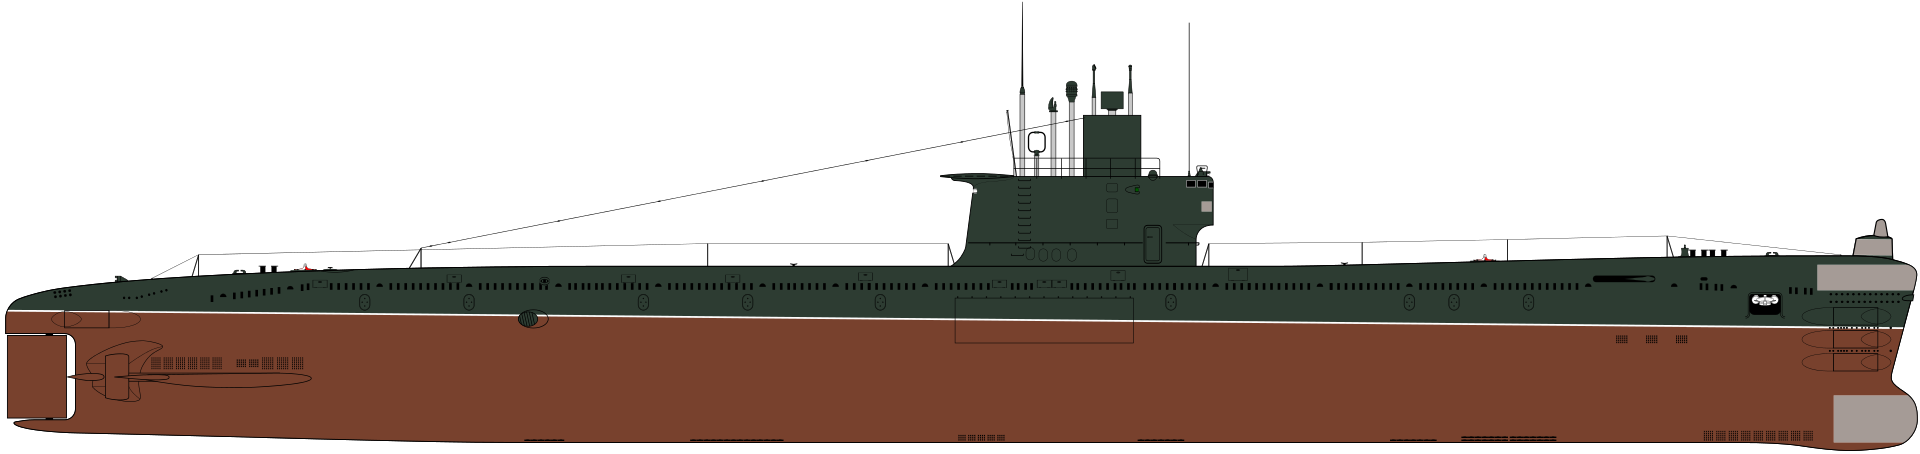 A submarine of the Romeo class